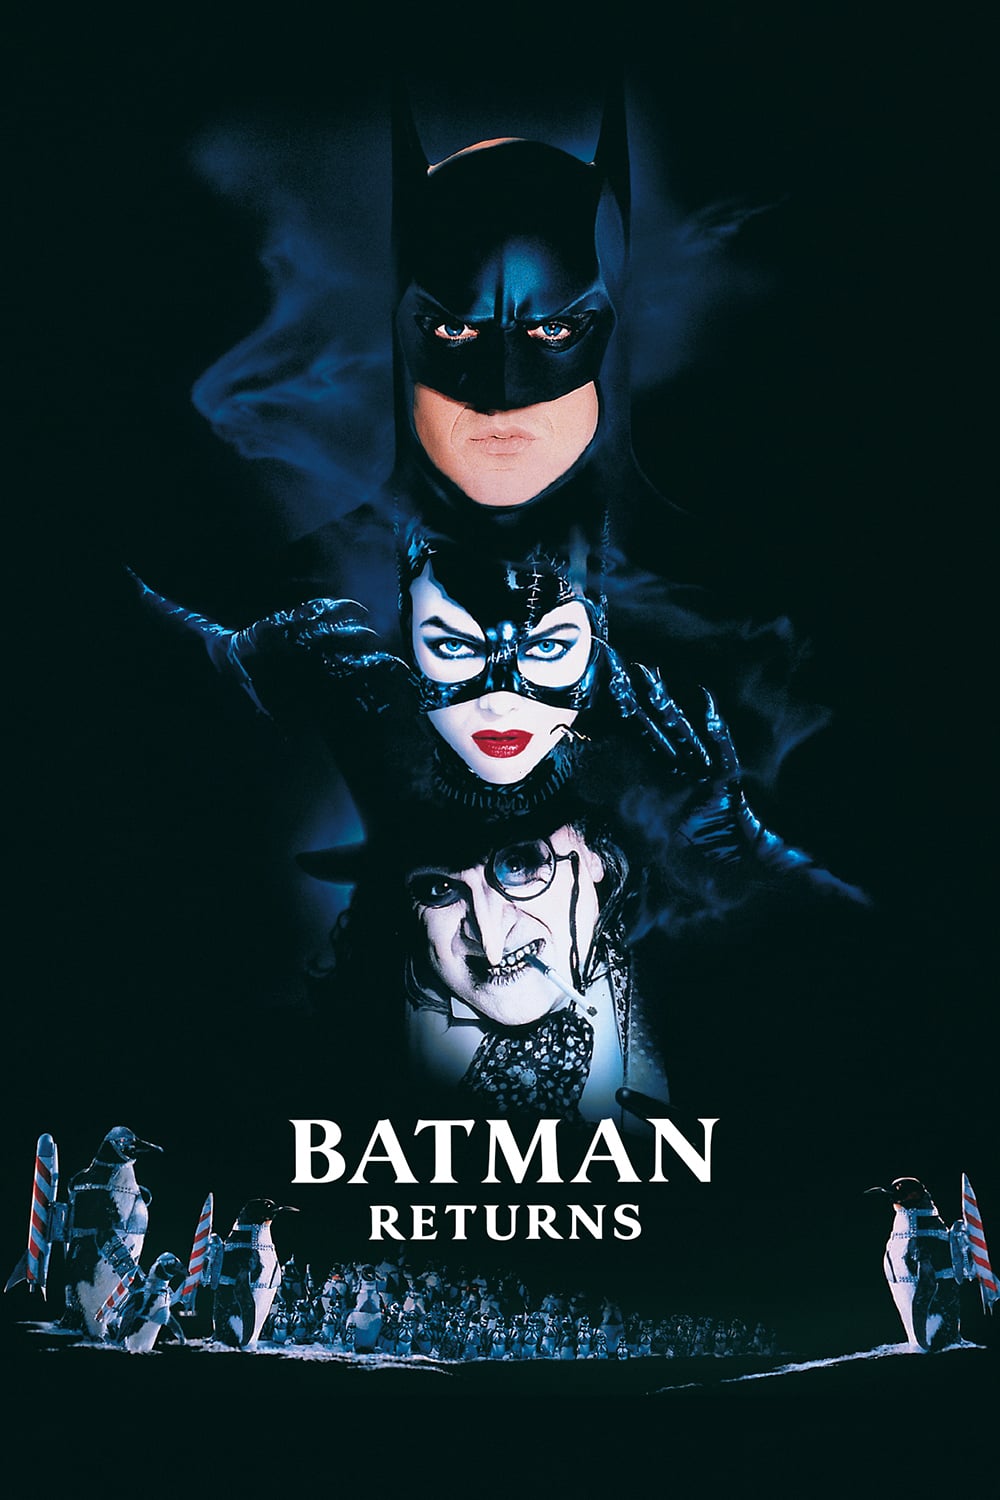 Poster for the movie "Batman Returns"